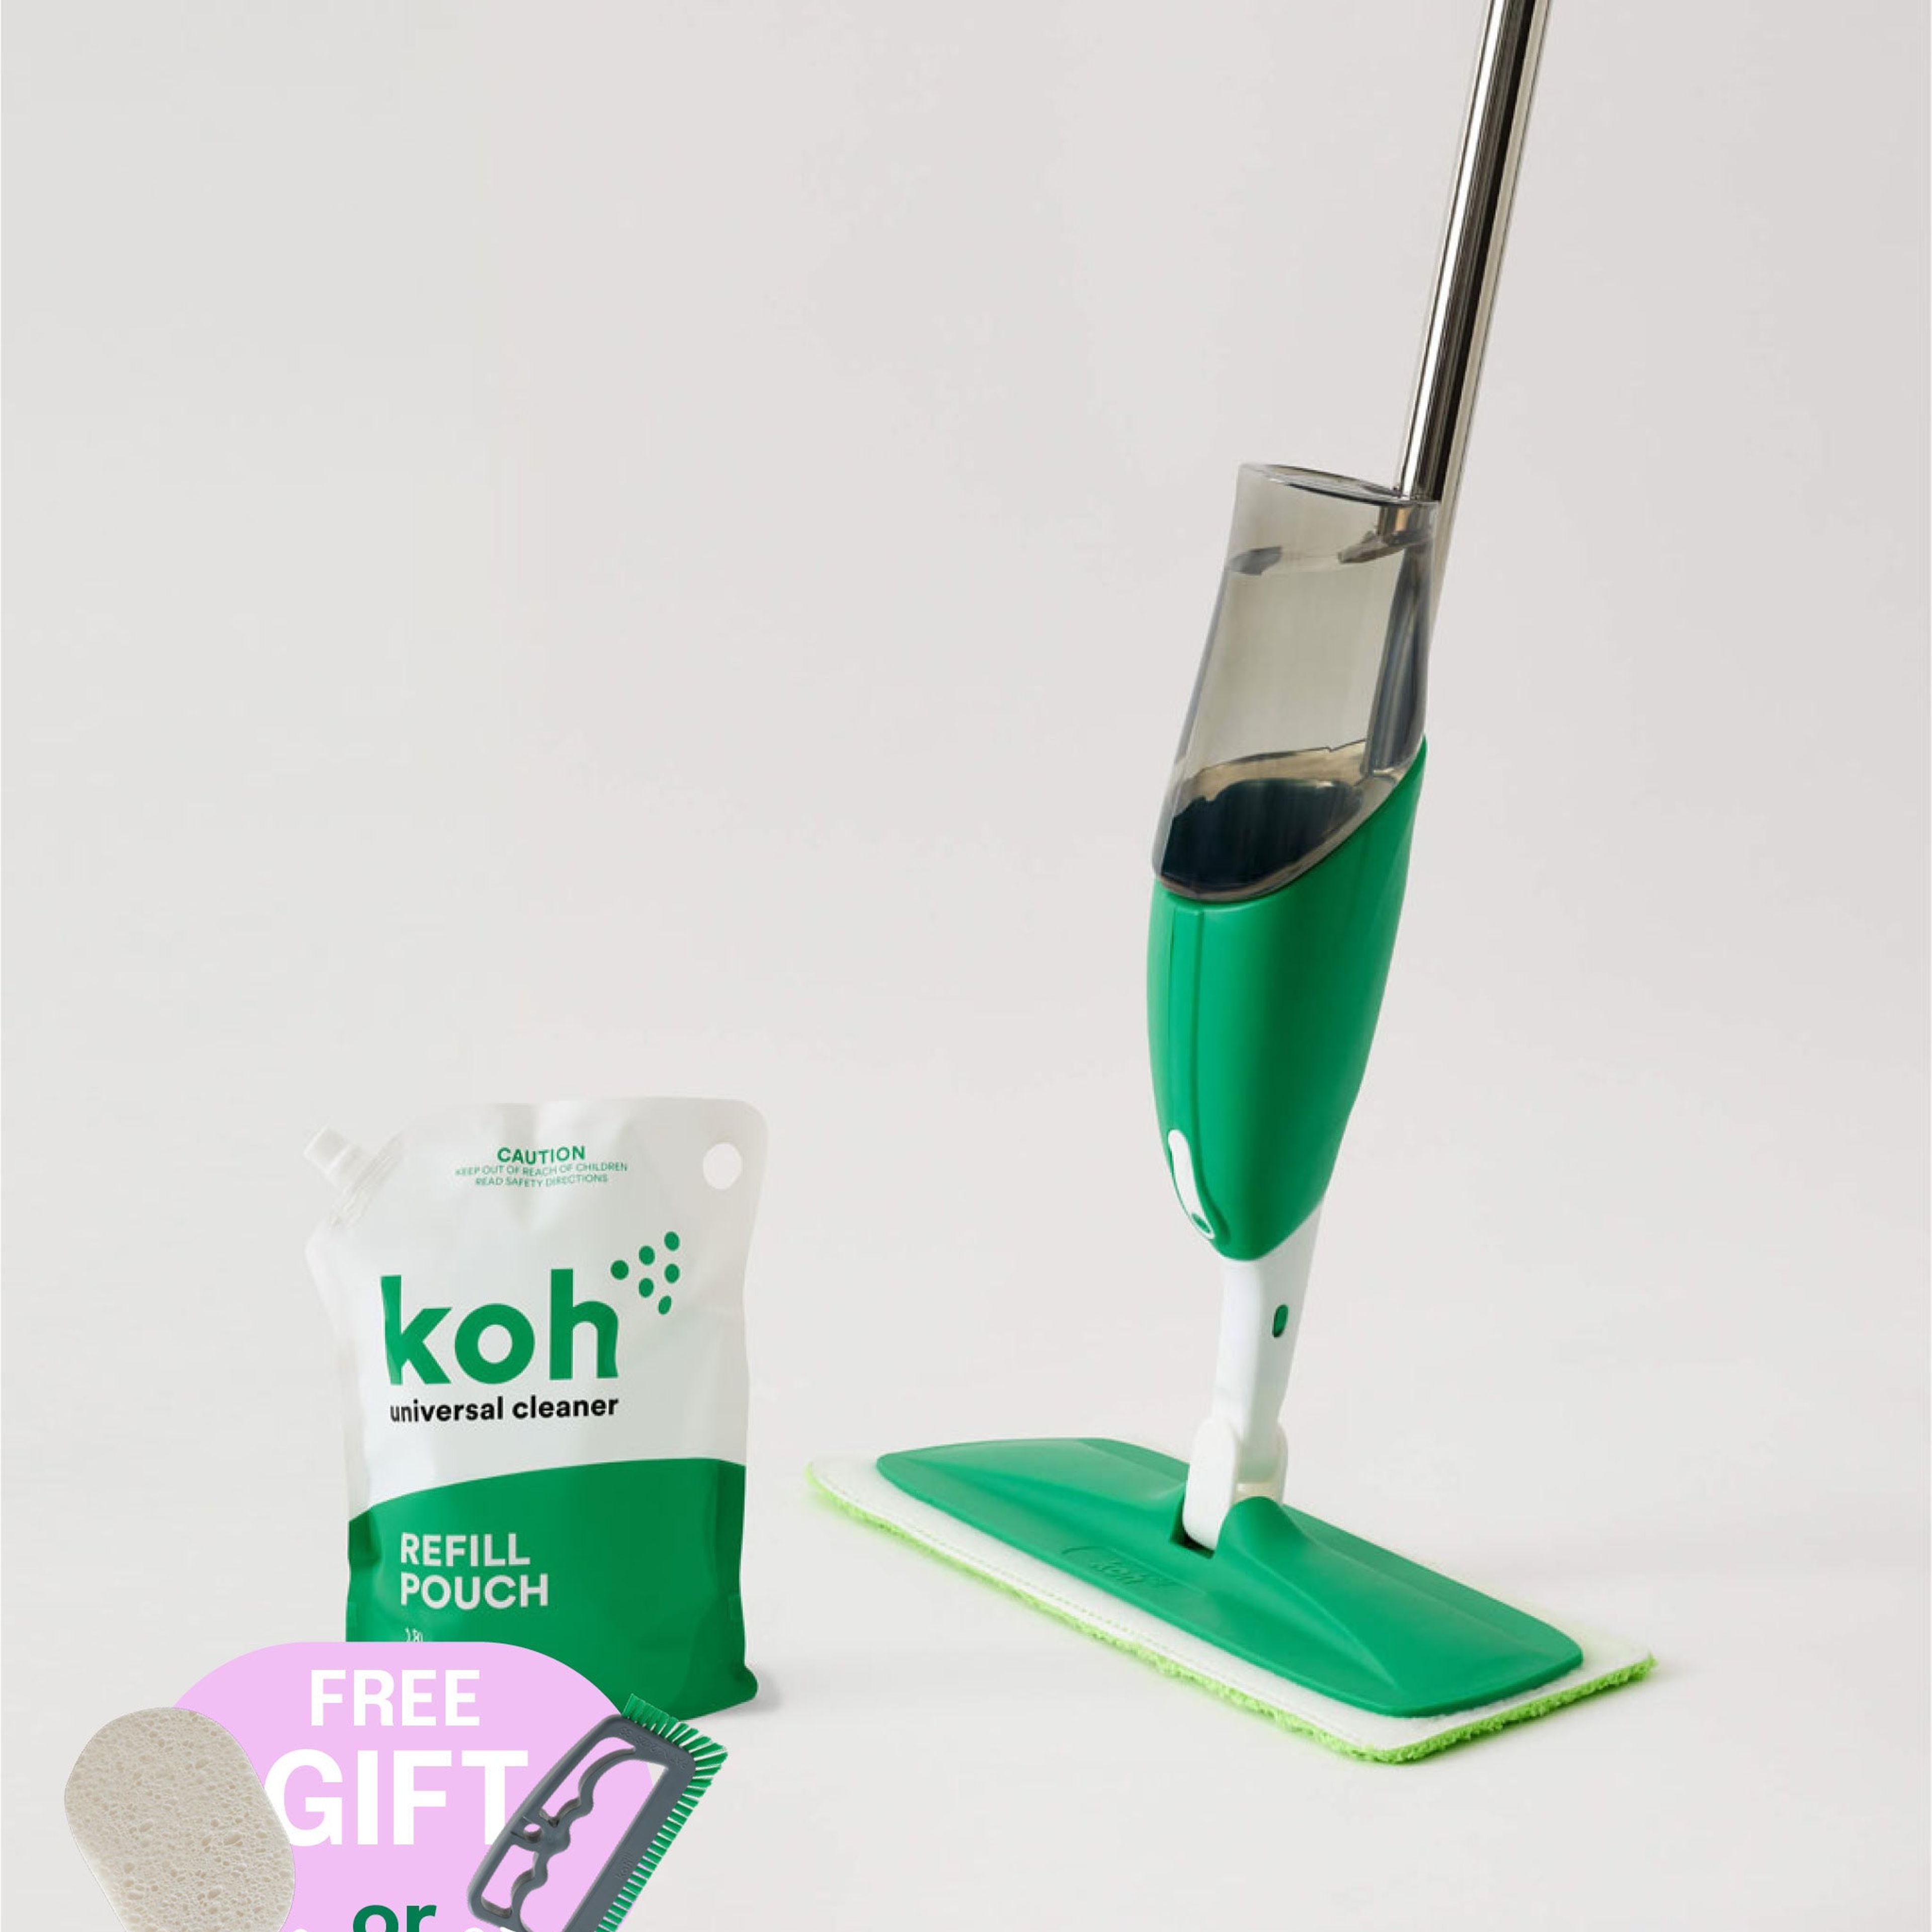 Spray Mop Starter Kit